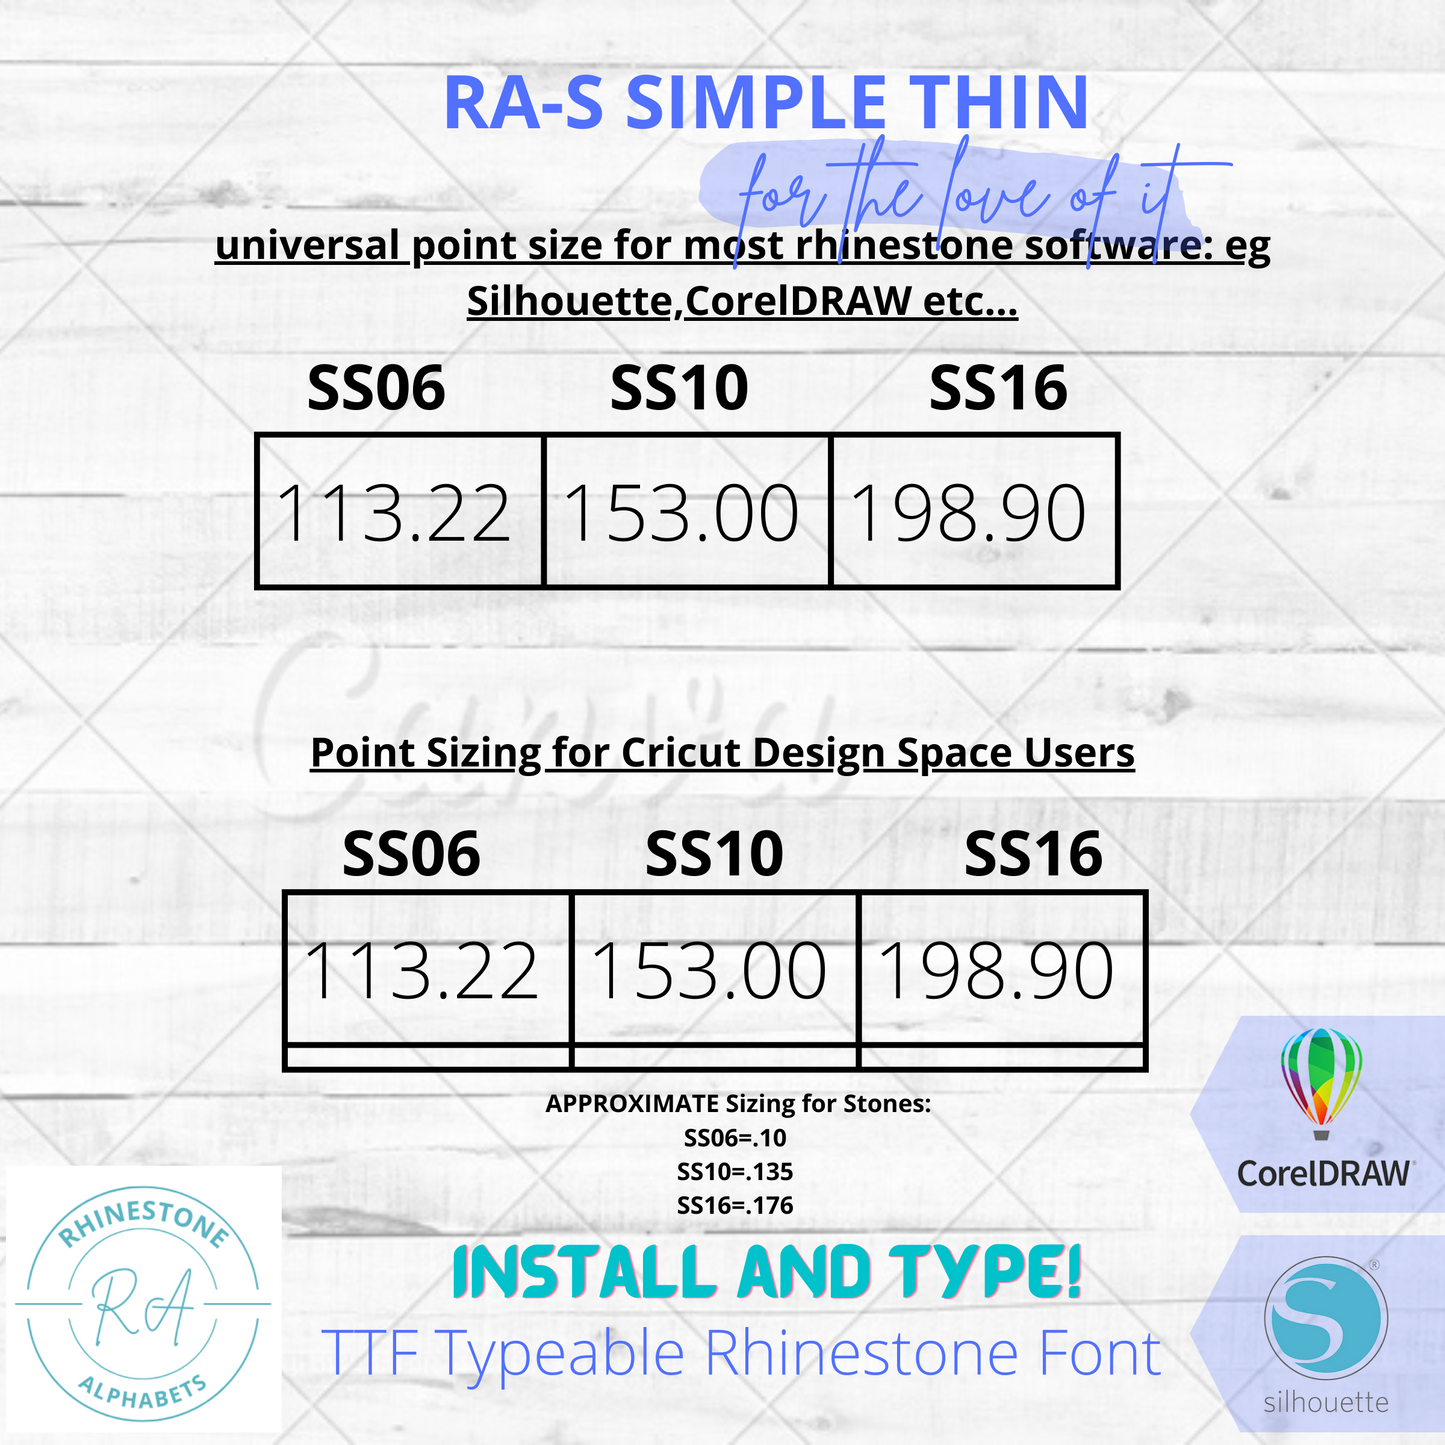 RA-S Simple Thin